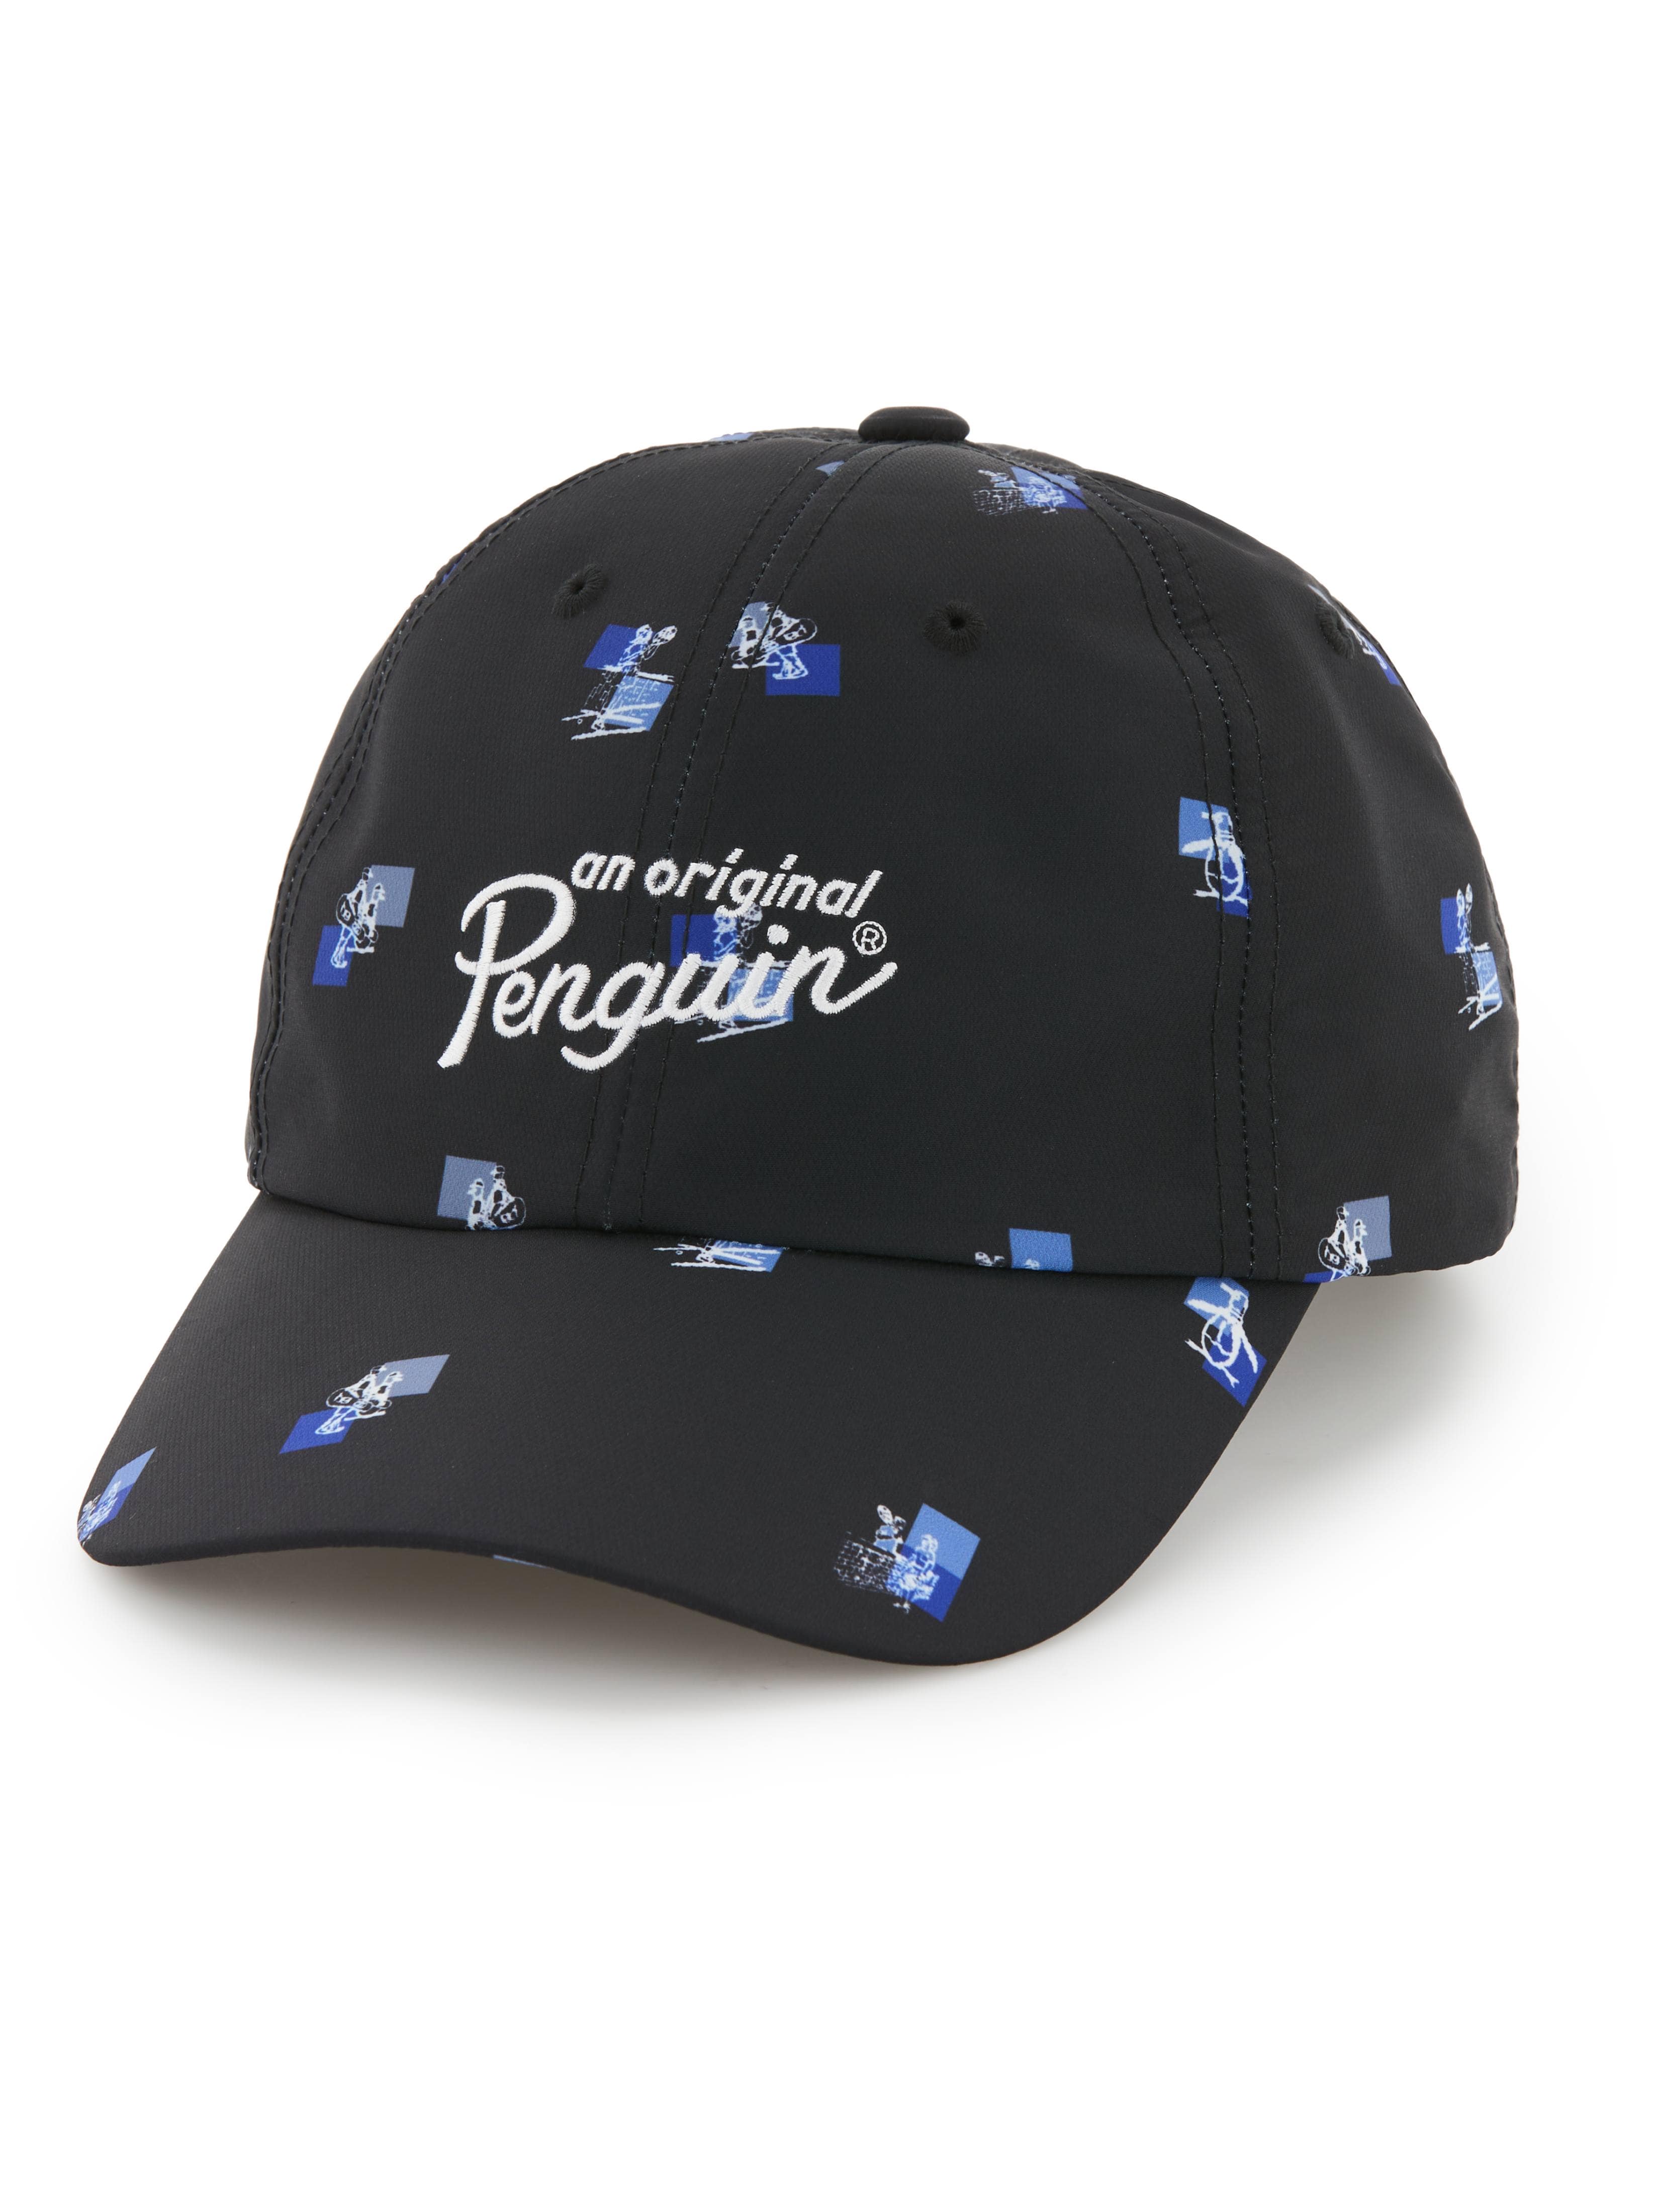 Original Penguin Tennis Club Hat, Black, 100% Polyester | Golf Apparel Shop